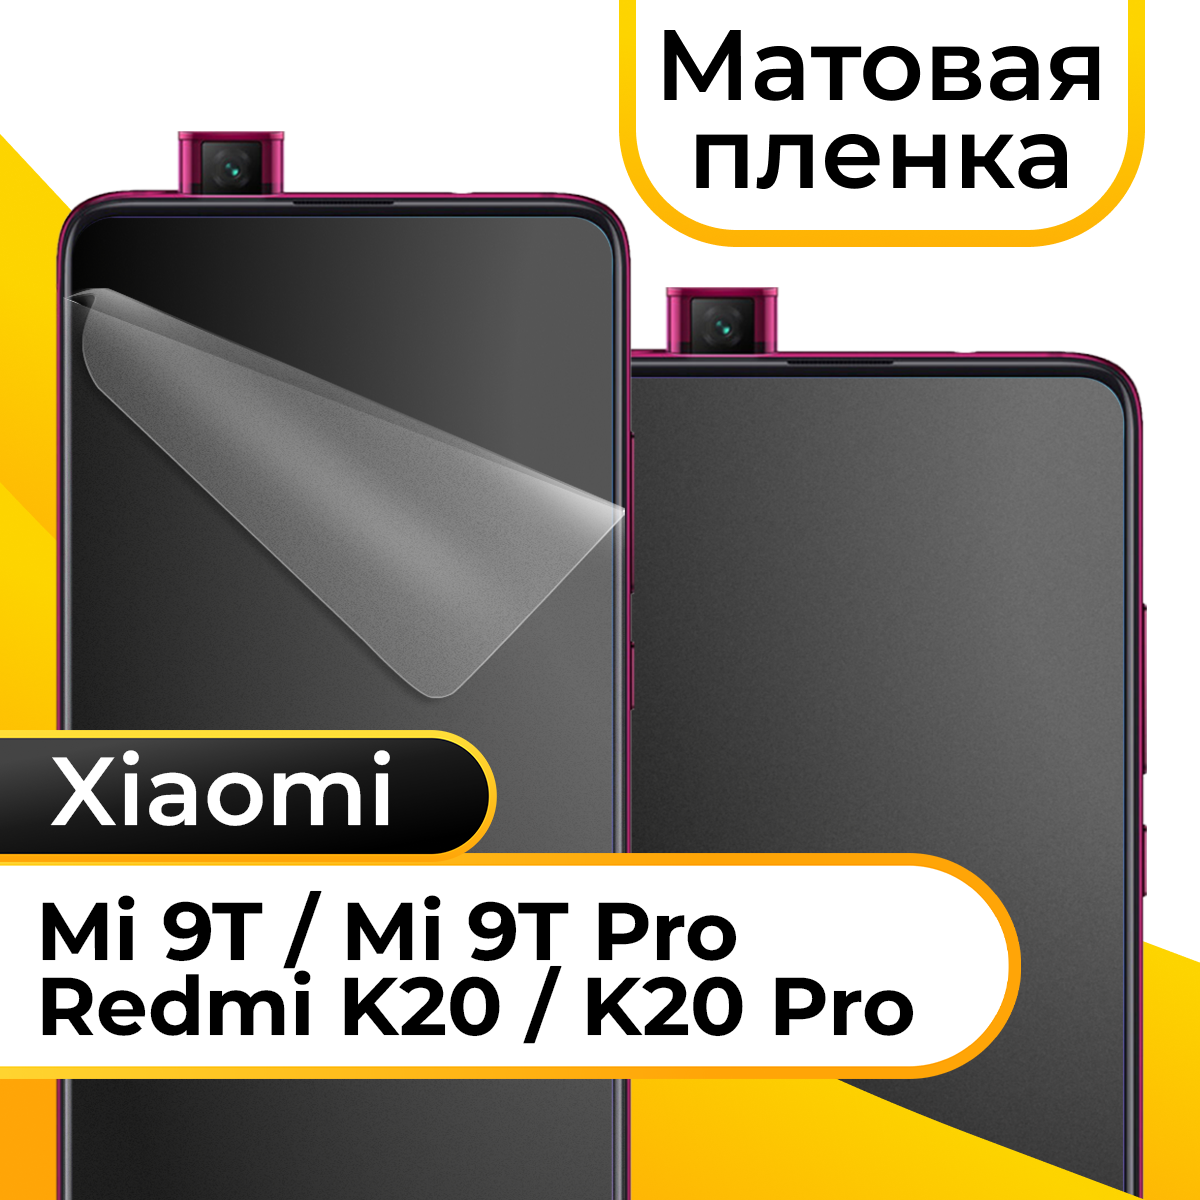 Матовая пленка для смартфона Xiaomi Mi 9T Mi 9T Pro Redmi K20 и K20 Pro / Защитная пленка на смартфон Сяоми Ми 9Т Ми 9Т Про Редми К20 и К20 Про